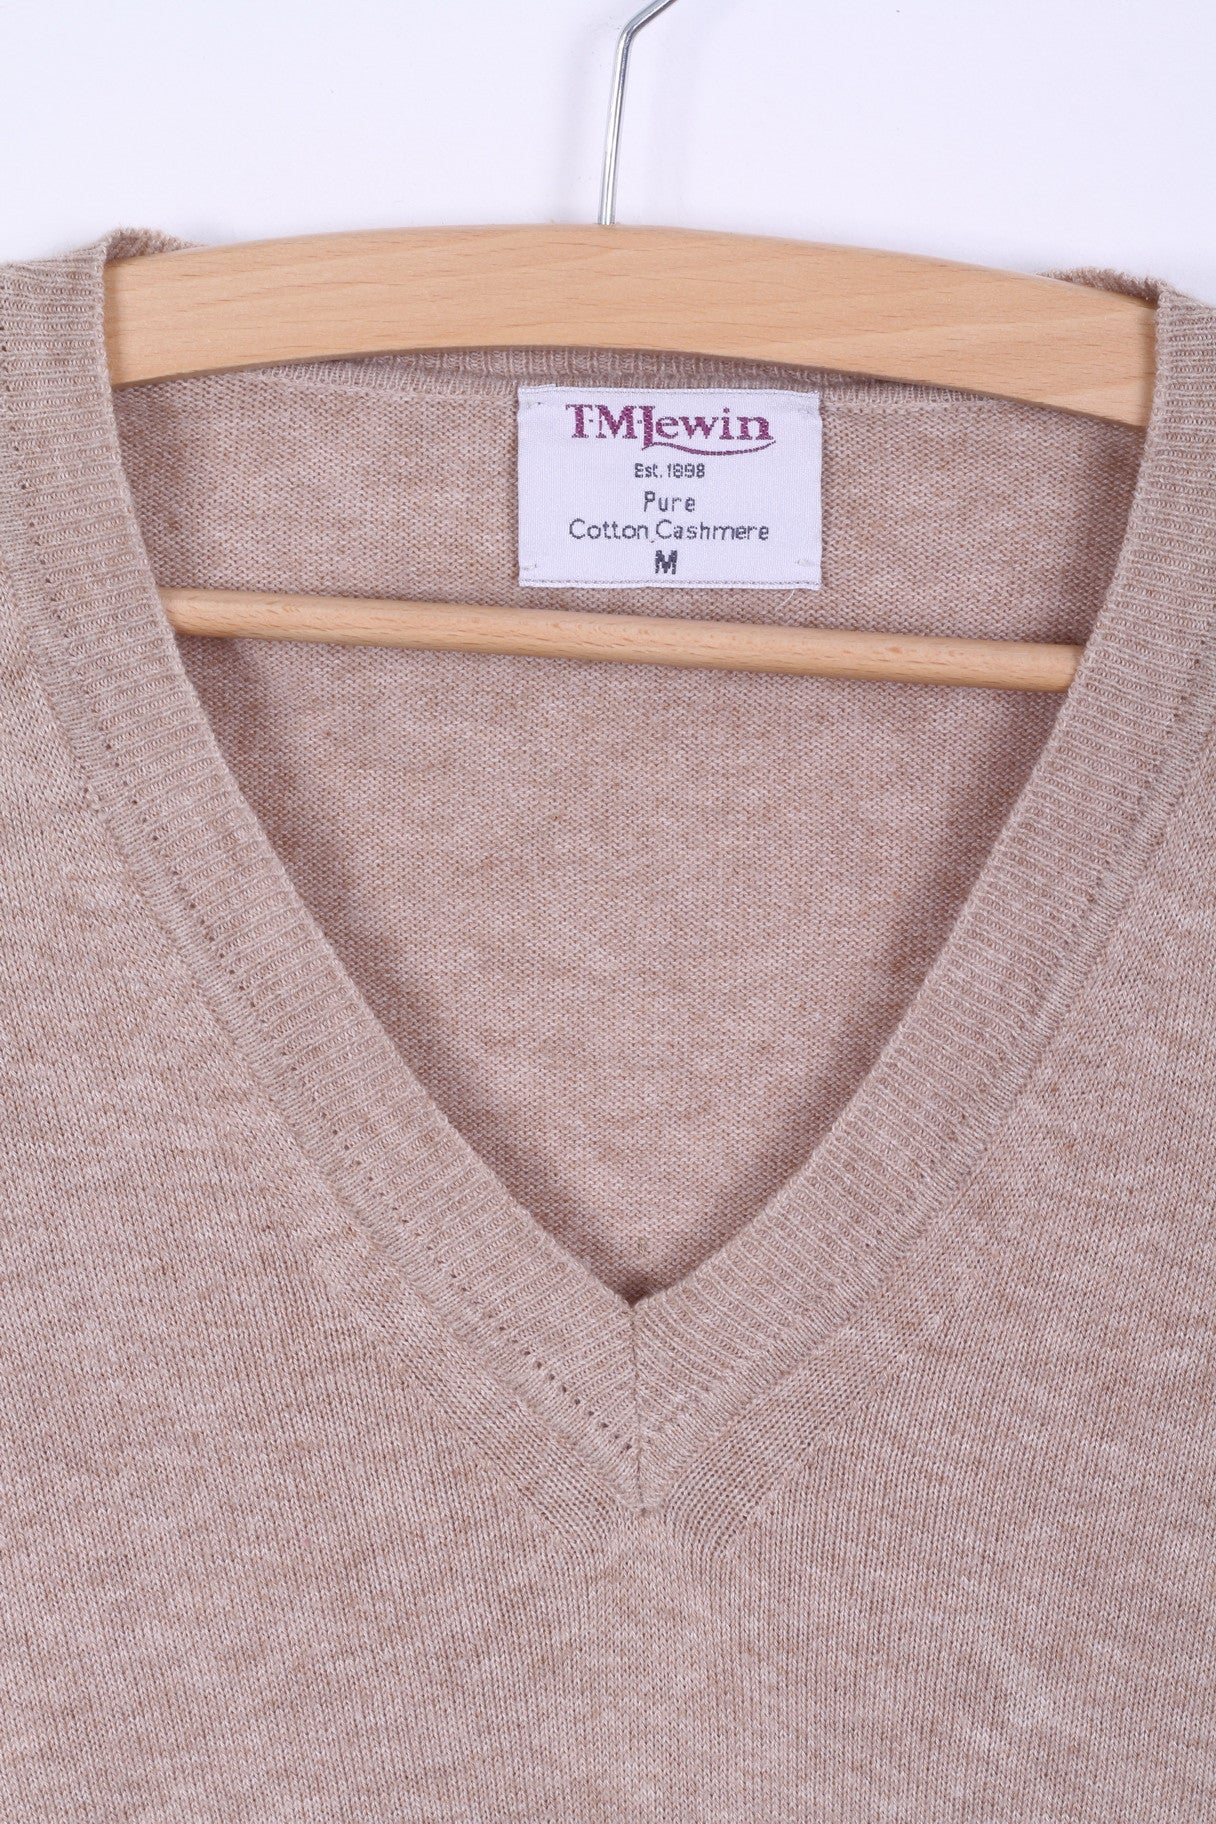 T.M. Lewin Mens M Jumper Beige Cotton Cashmere Blend V Neck Sweater